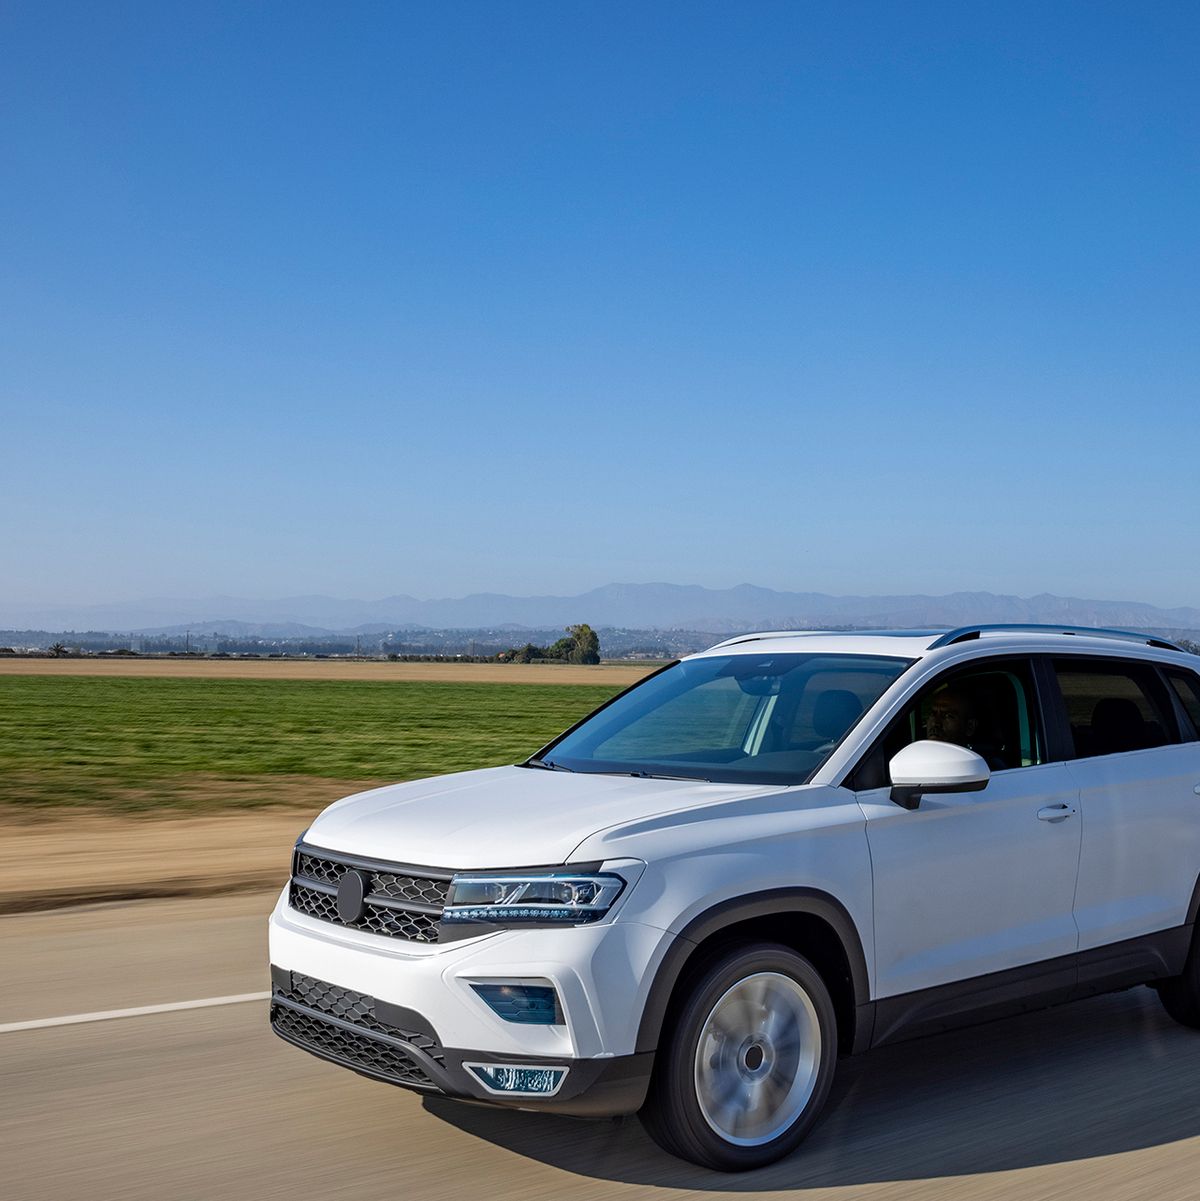 2022 Volkswagen Taos first drive, Car Reviews